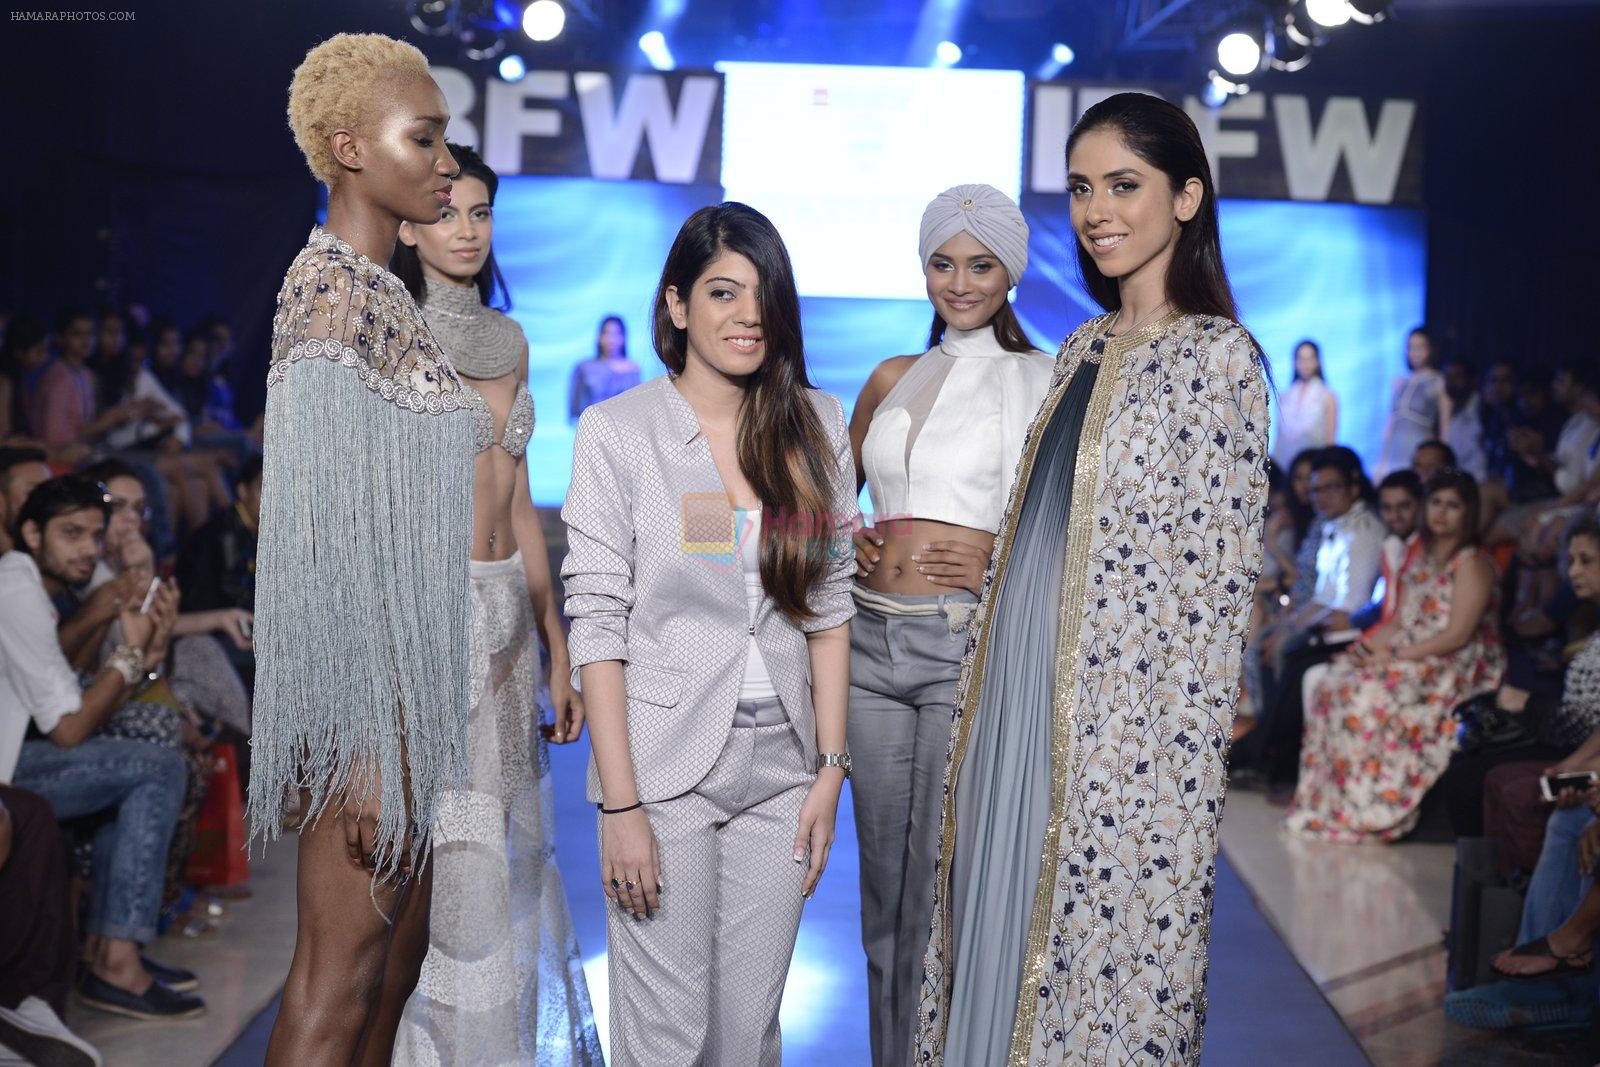 Model walk the ramp for Advitya by Esha Sethi Thirani Show at Gionee india beach fashion week day 1 on 29th Oct 2015